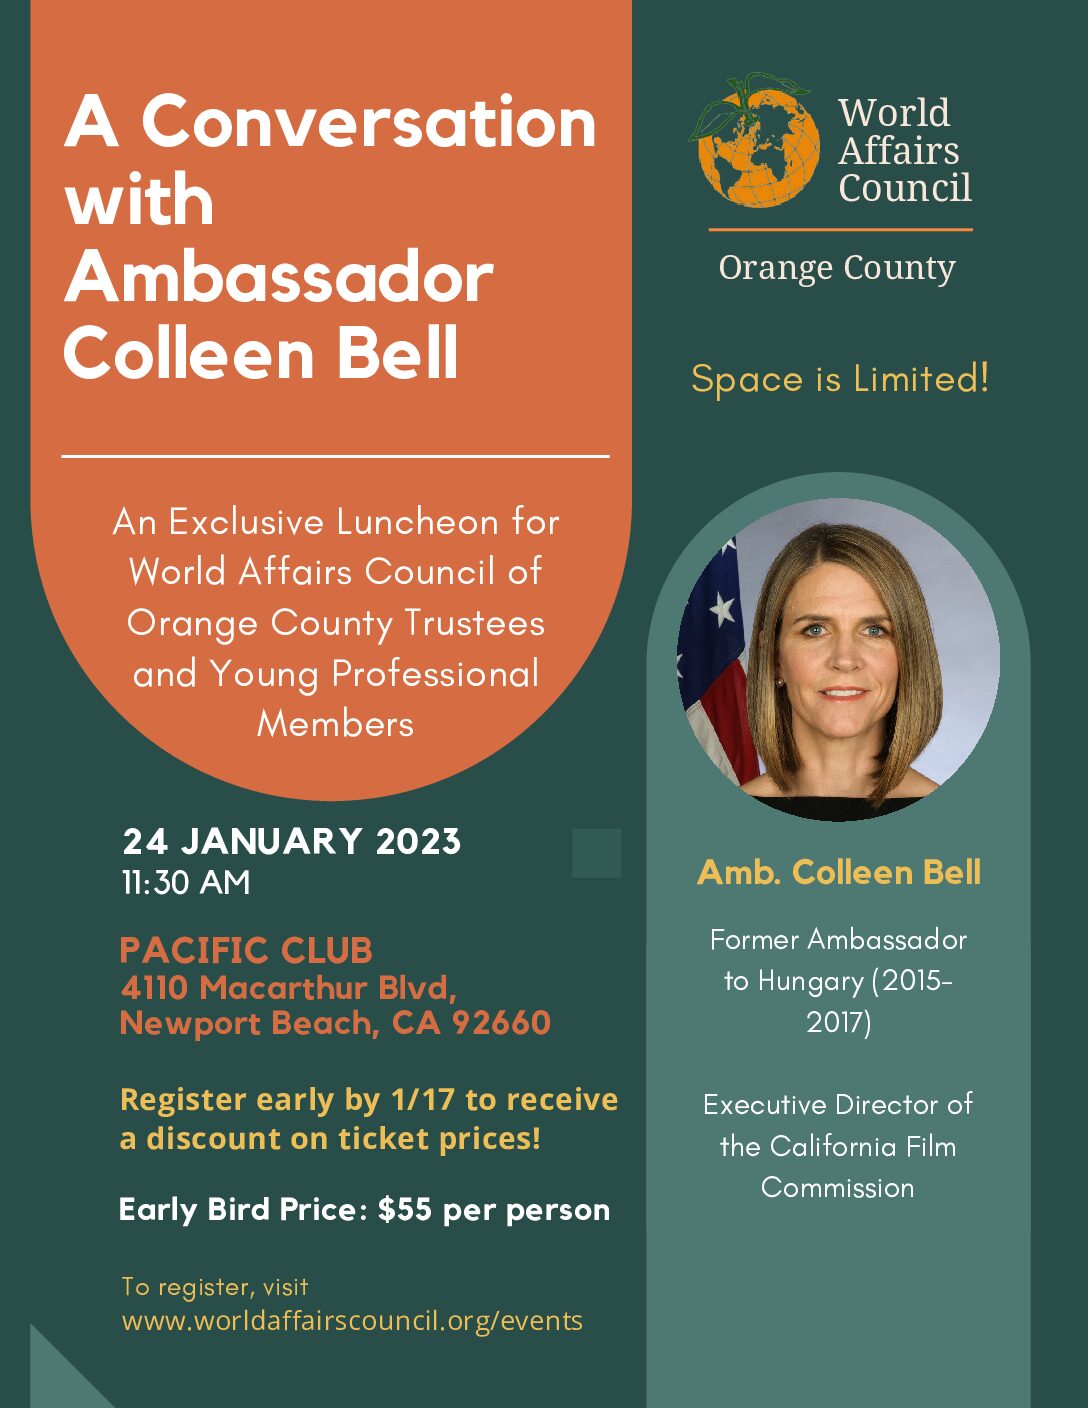 A Conversation with Ambassador Colleen Bell